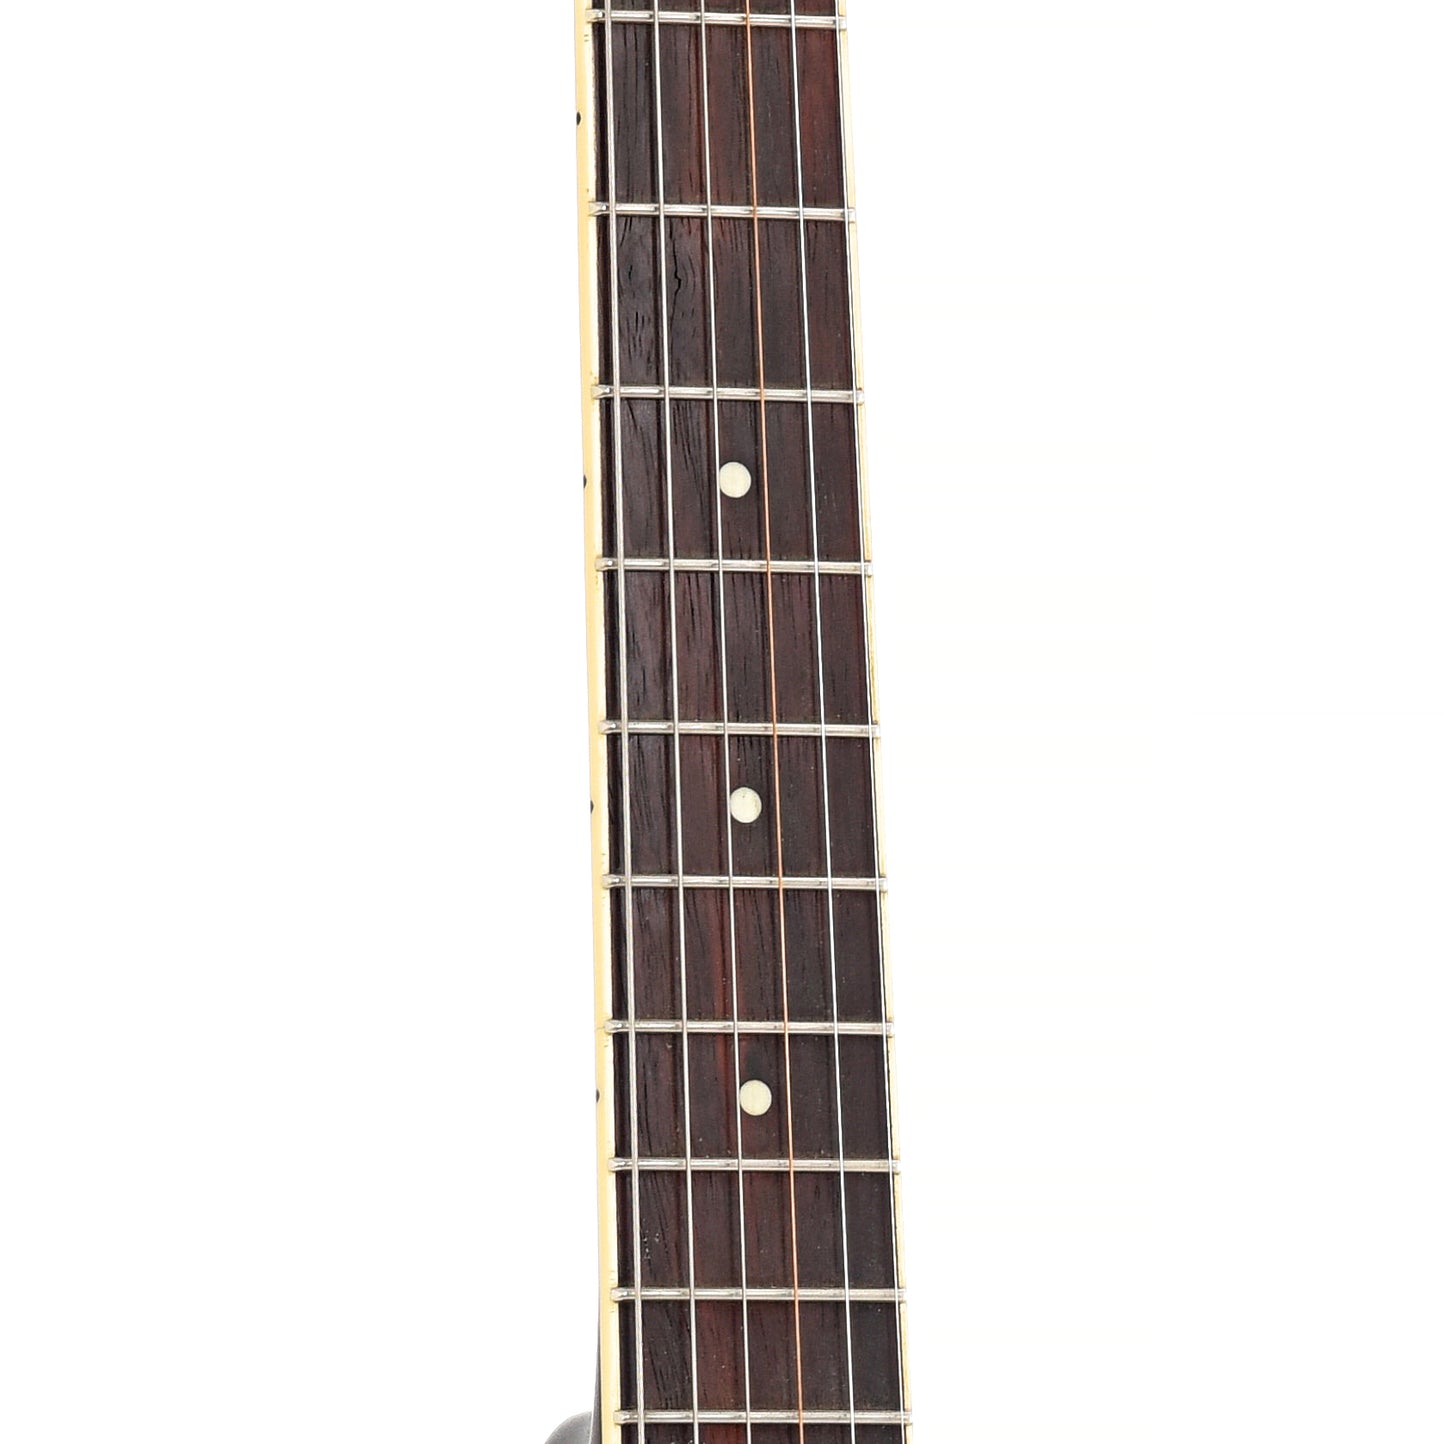 Fretboard of Gretsch G9240 "Alligator" Resonator Guitar